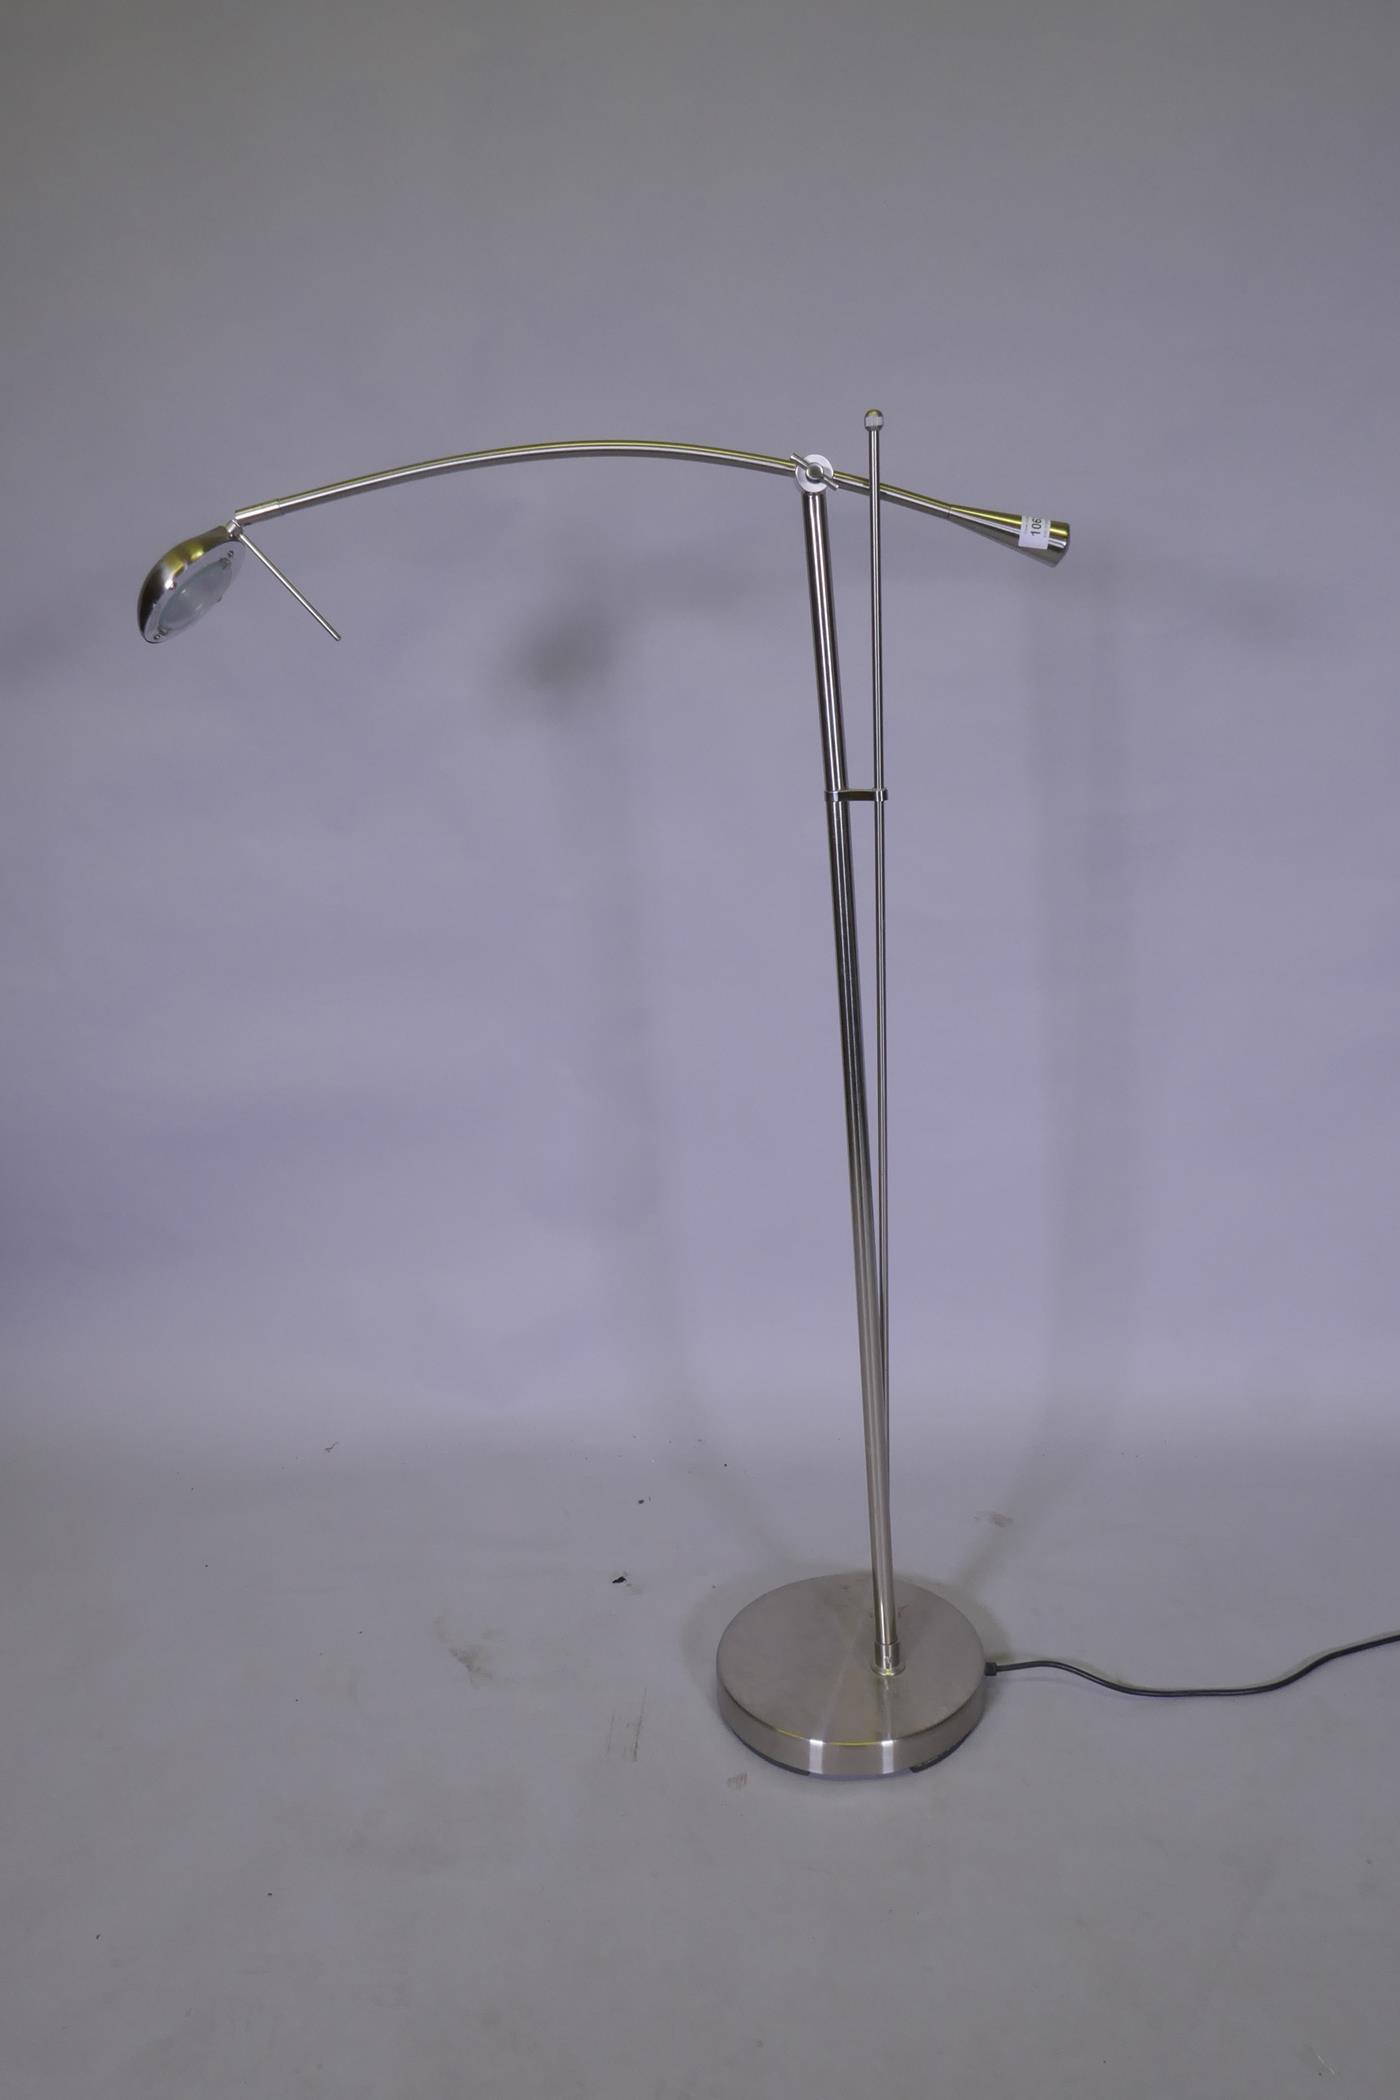 A brushed metal adjustable floor lamp, 145cm high - Image 2 of 2